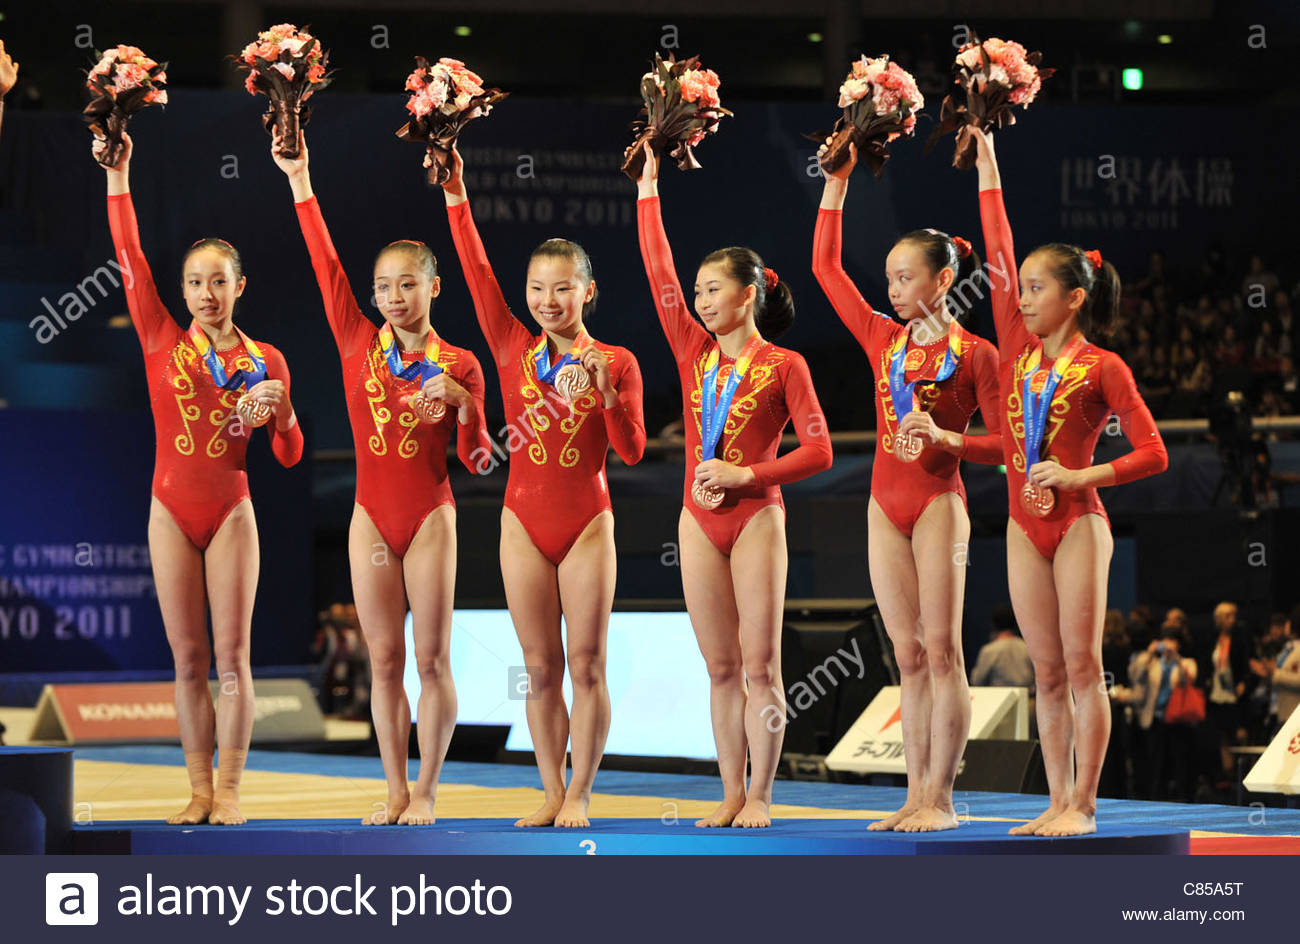 team-china-chn-line-up-during-the-2011-artistic-gymnastics-world-championships-C85A5T.jpg